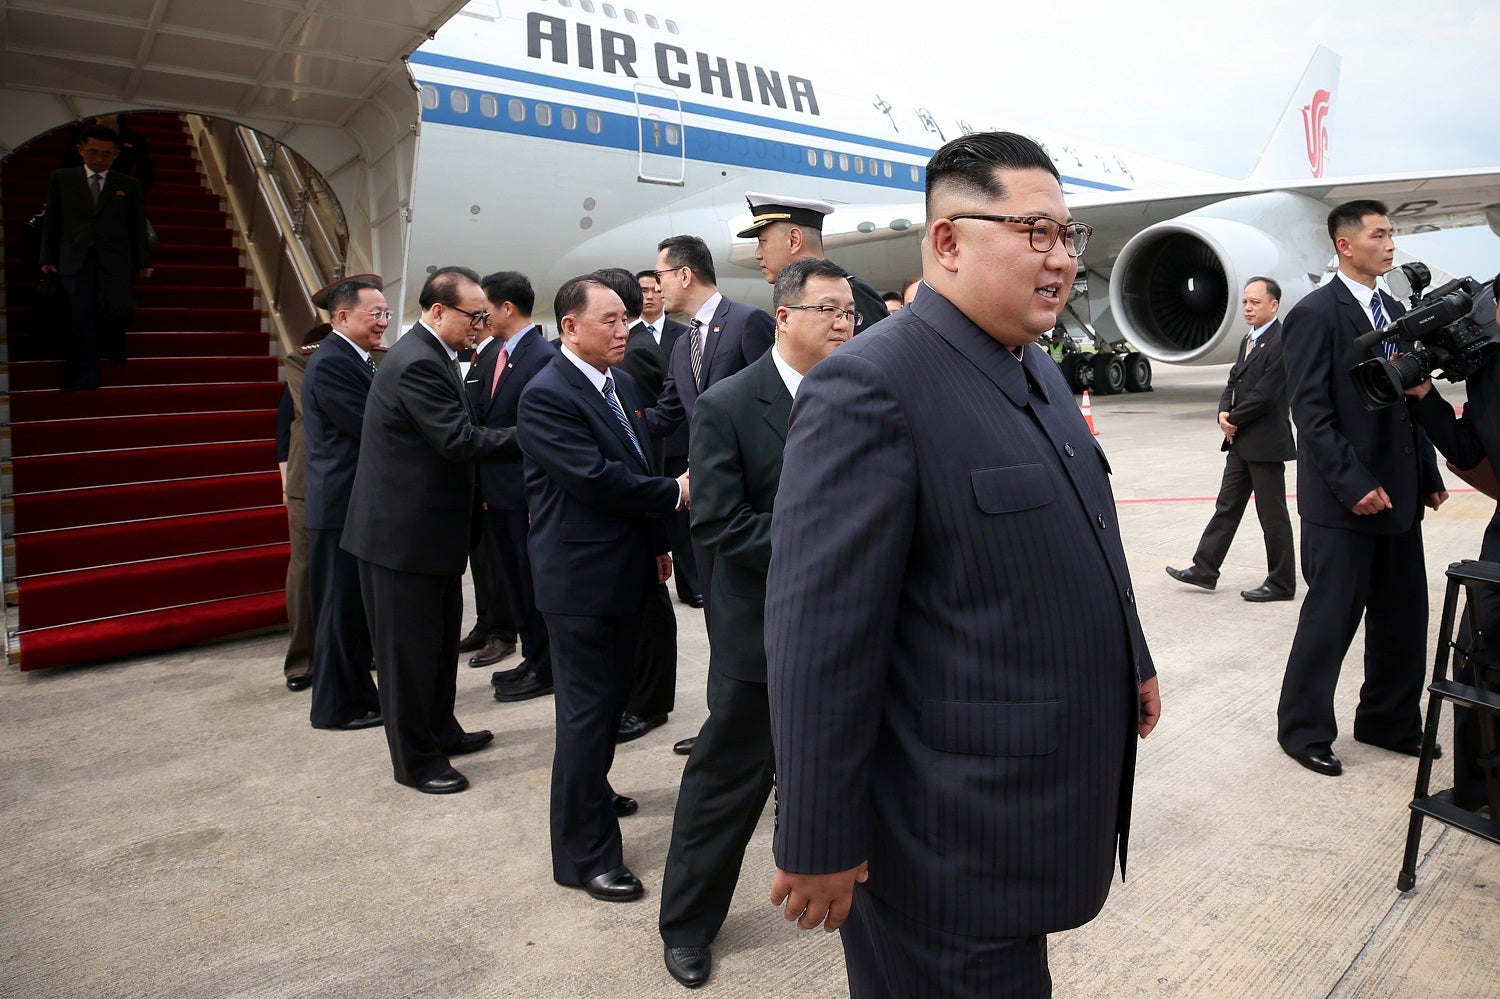 North Korean Leader Kim Jong-un Arrives In Singapore Ahead Of The U.S.-DPRK Summit